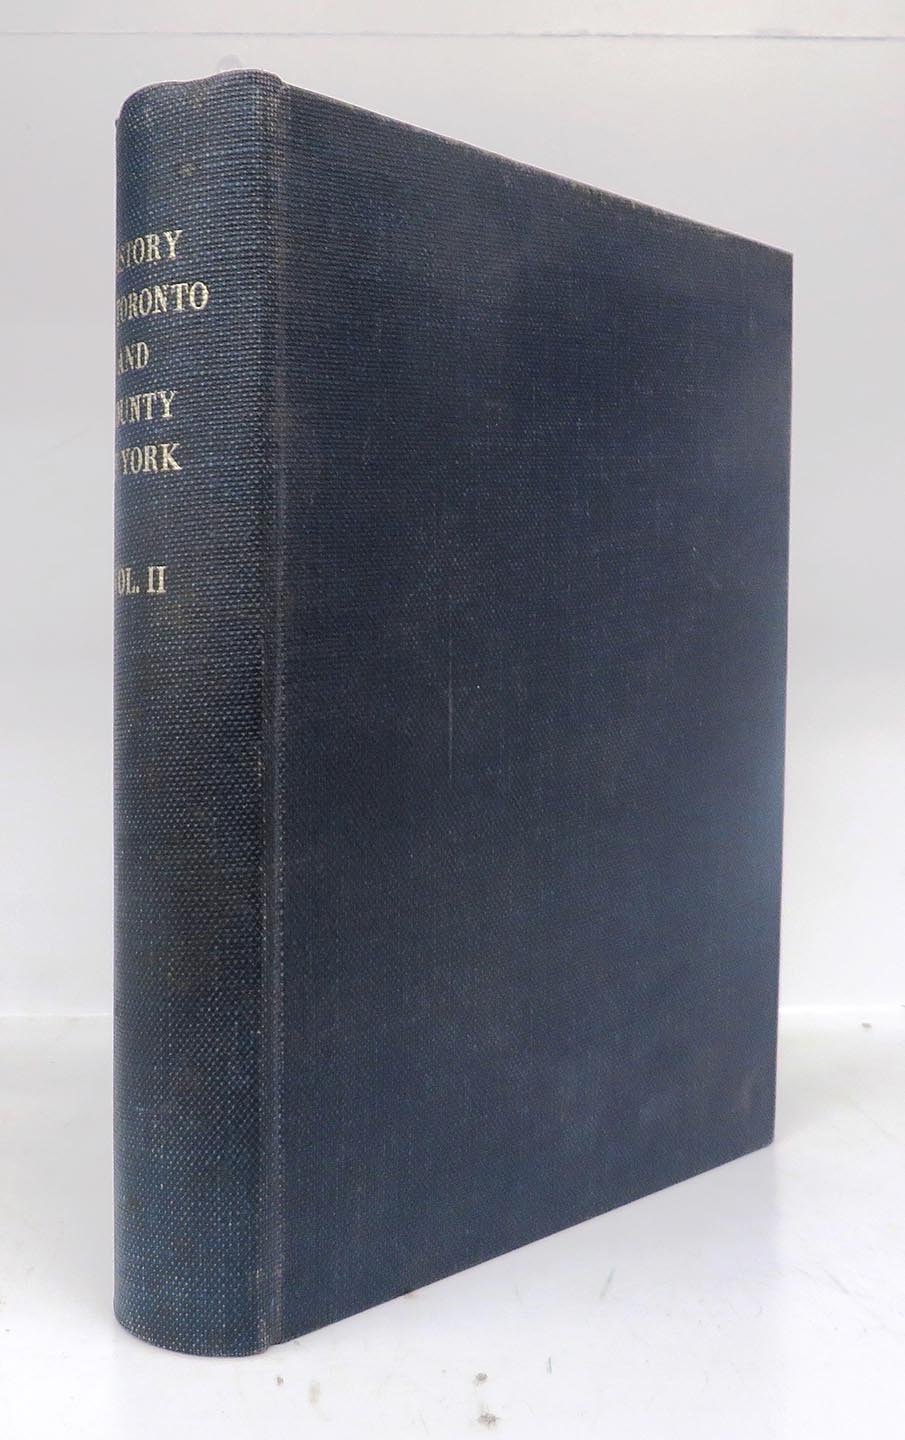 History of Toronto and County of York, Ontario. Vol. II